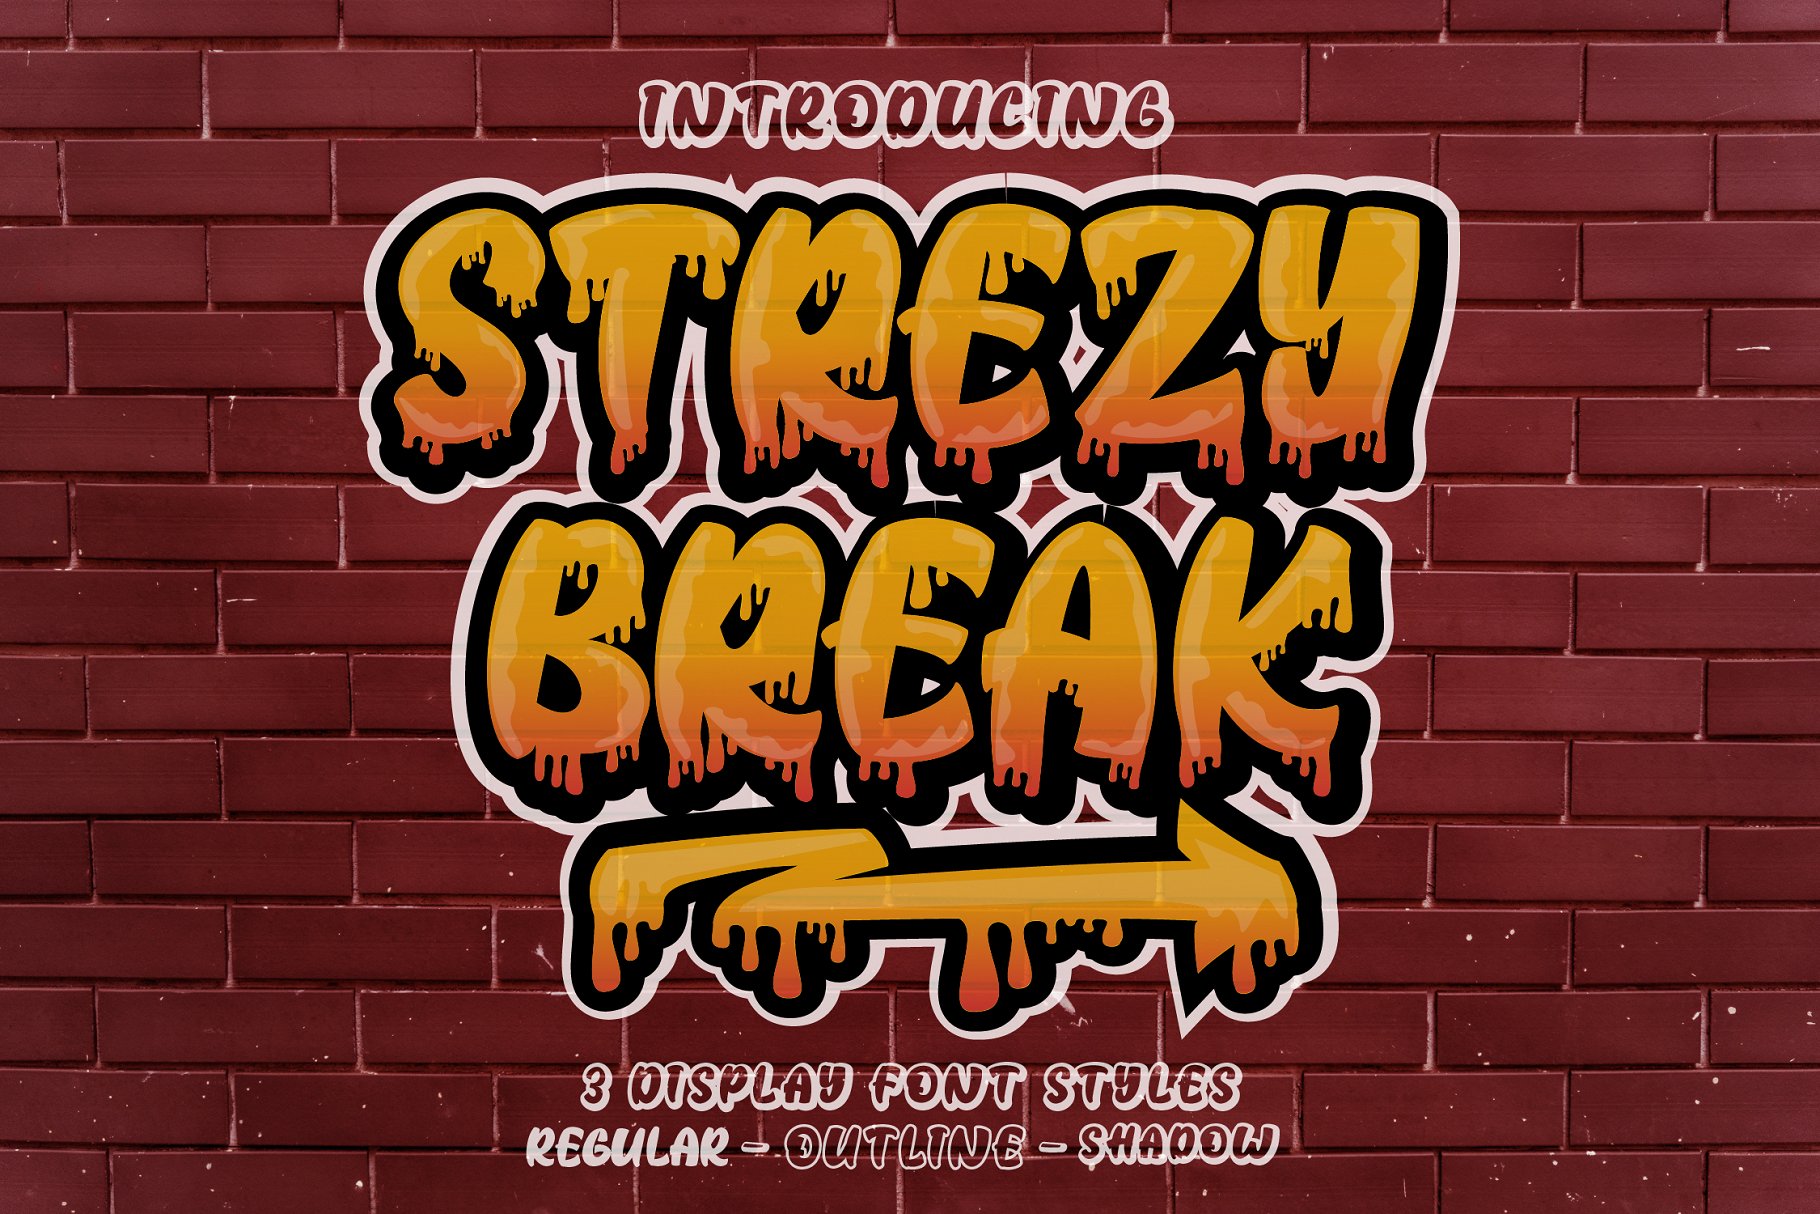 Strezy Break - Display Font cover image.